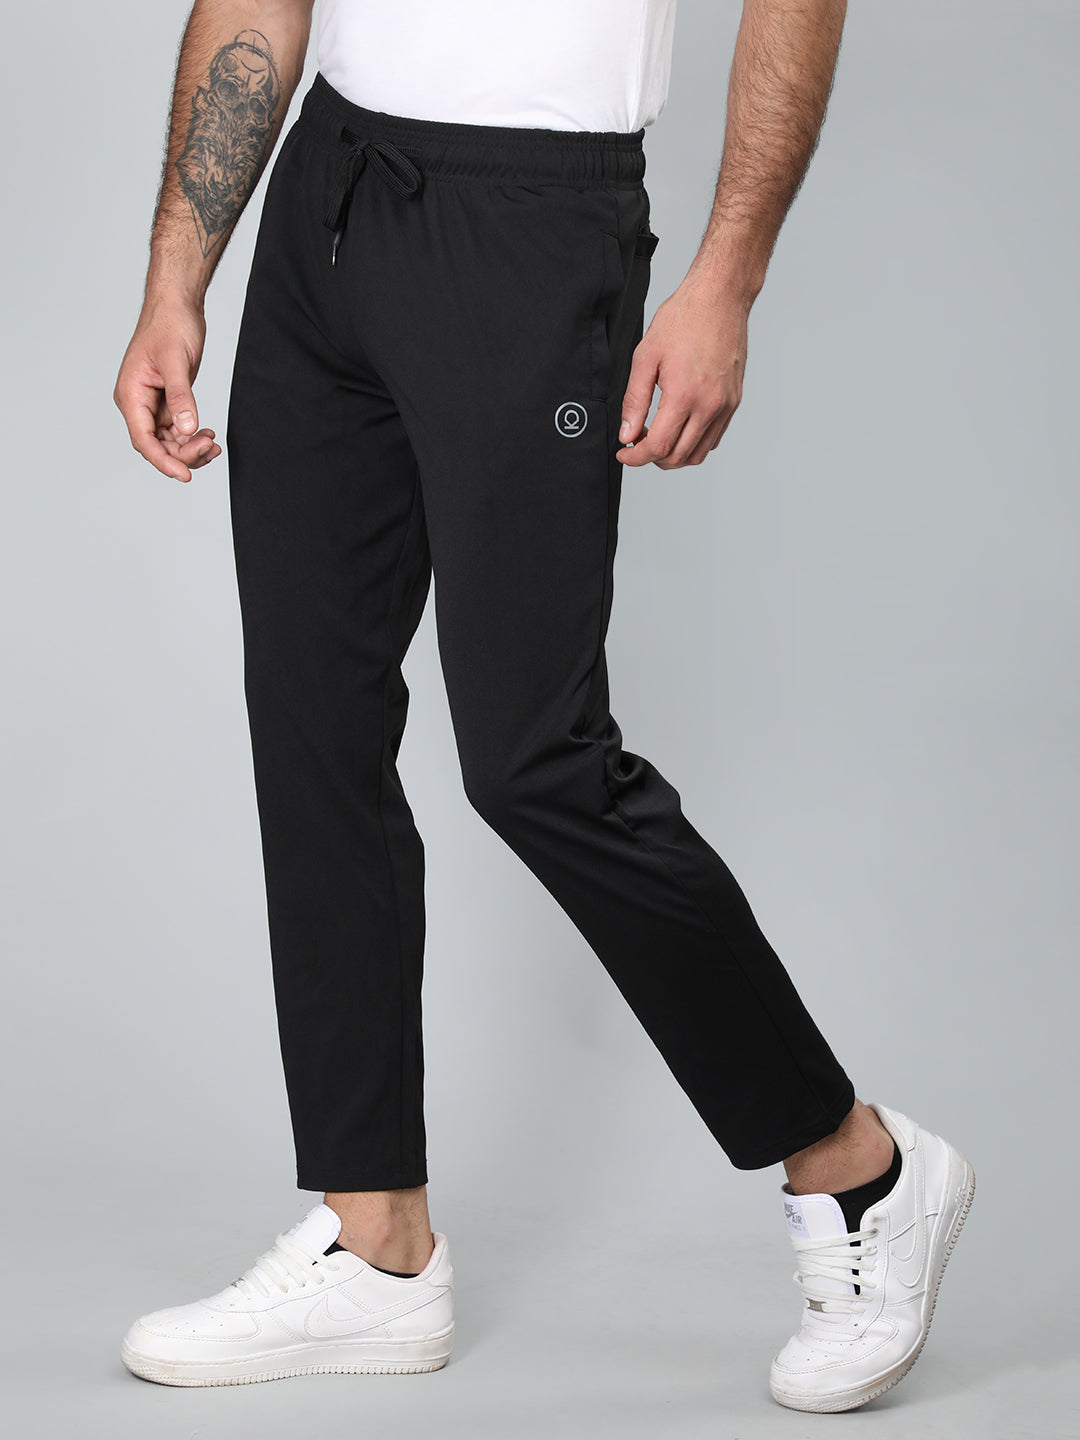 JOCKEY Self Design Men Grey Track Pants - Buy JOCKEY Self Design